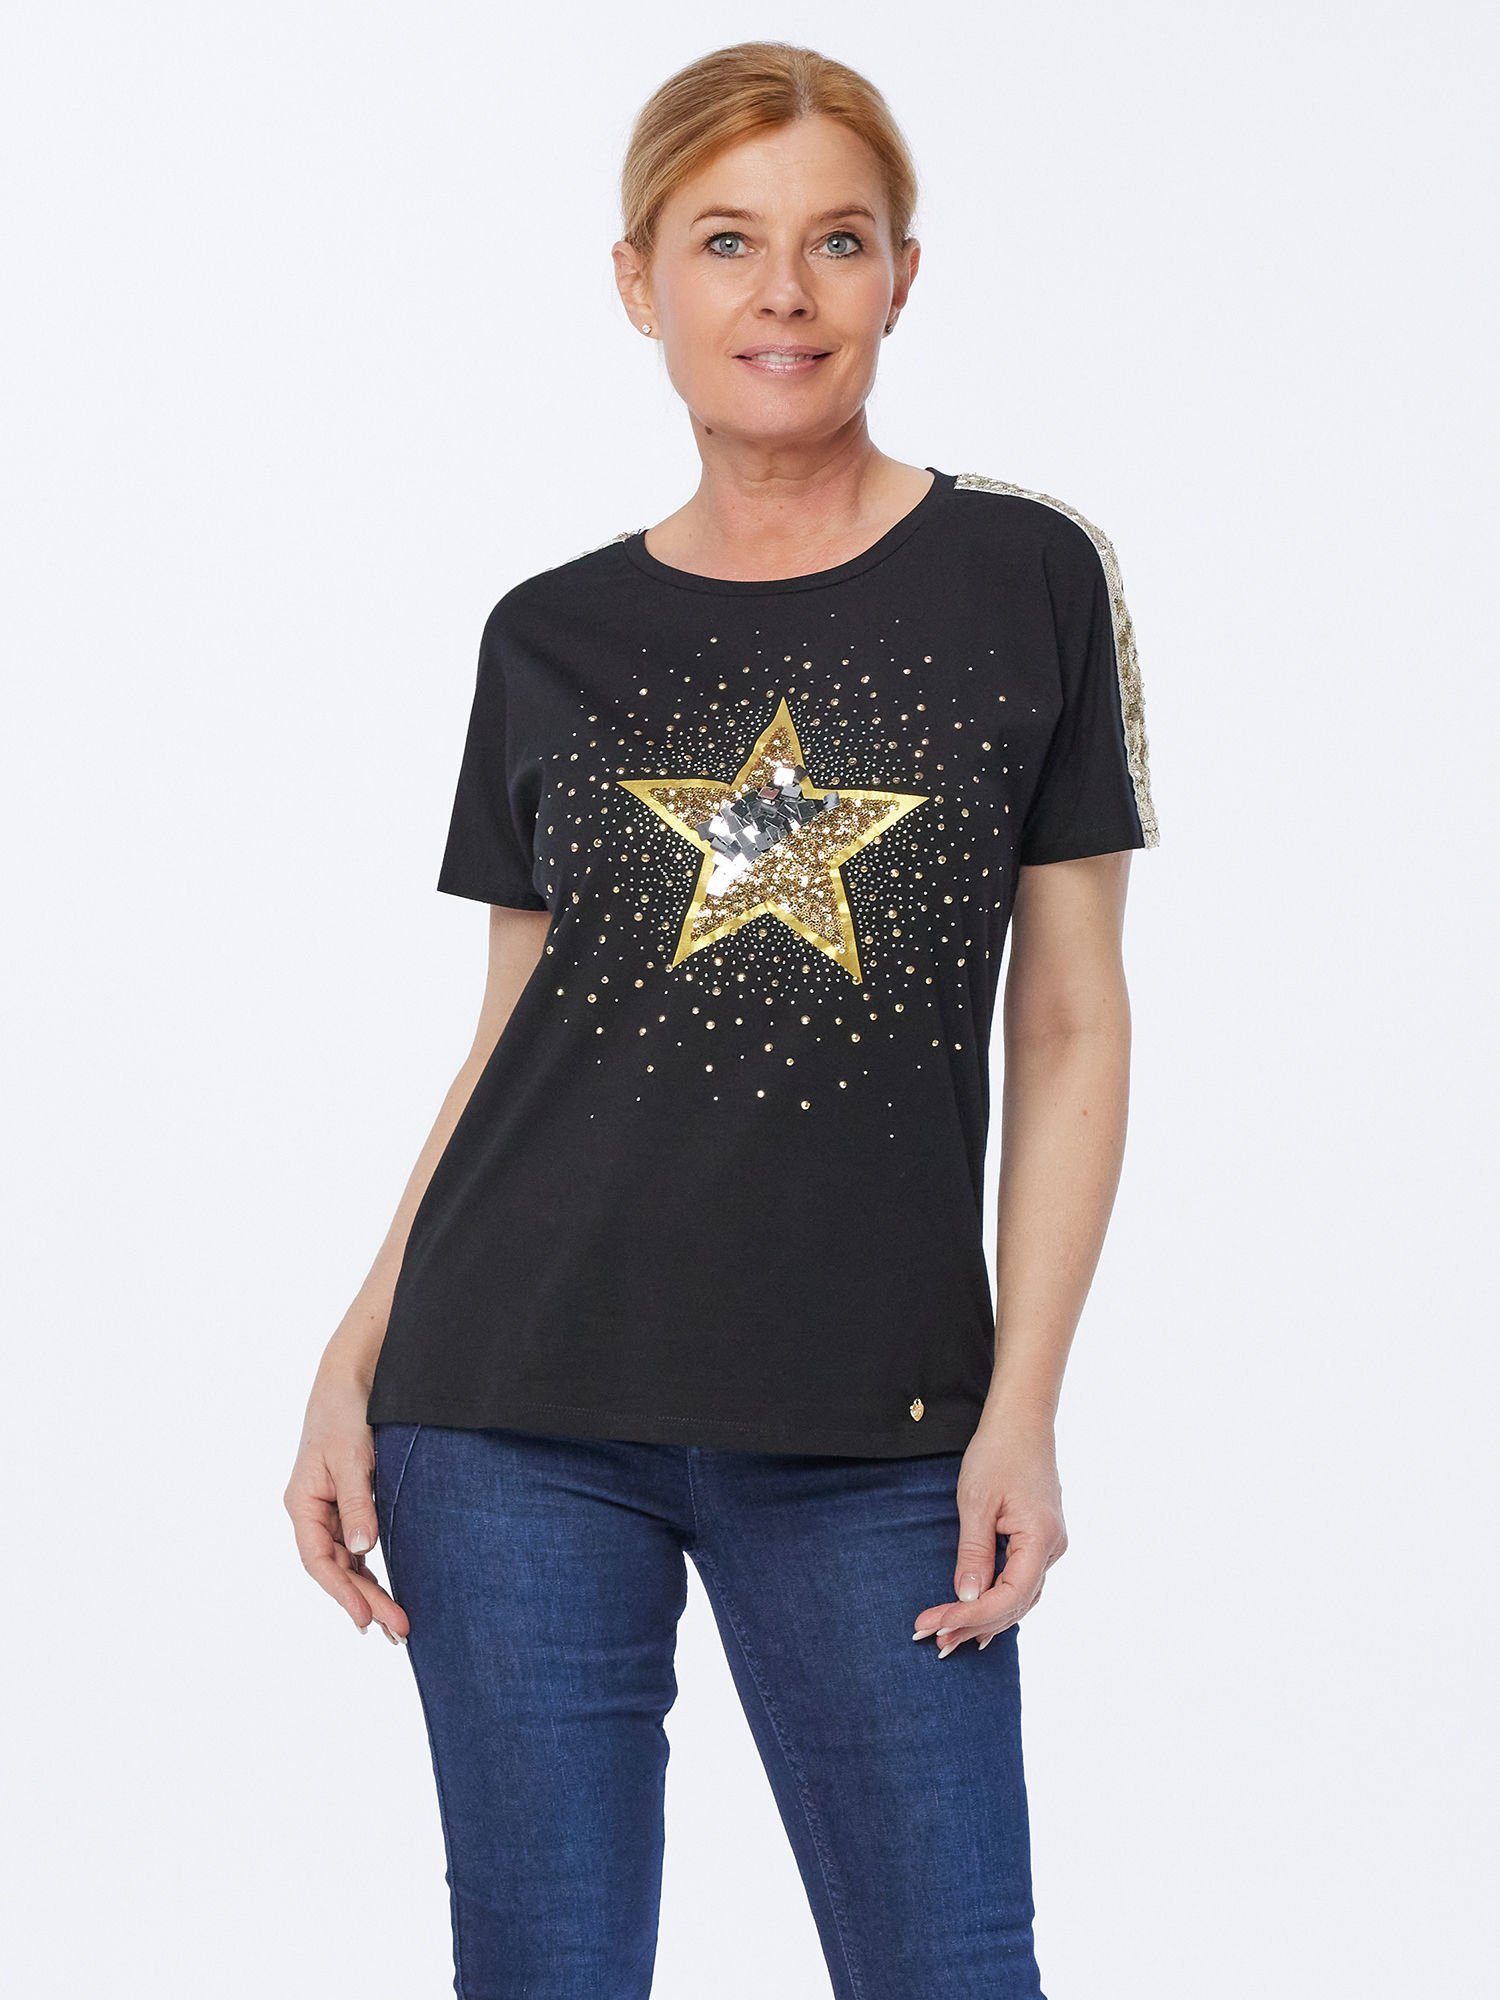 Christian Materne T-Shirt Kurzarmbluse mit Stern-Motiv schwarz